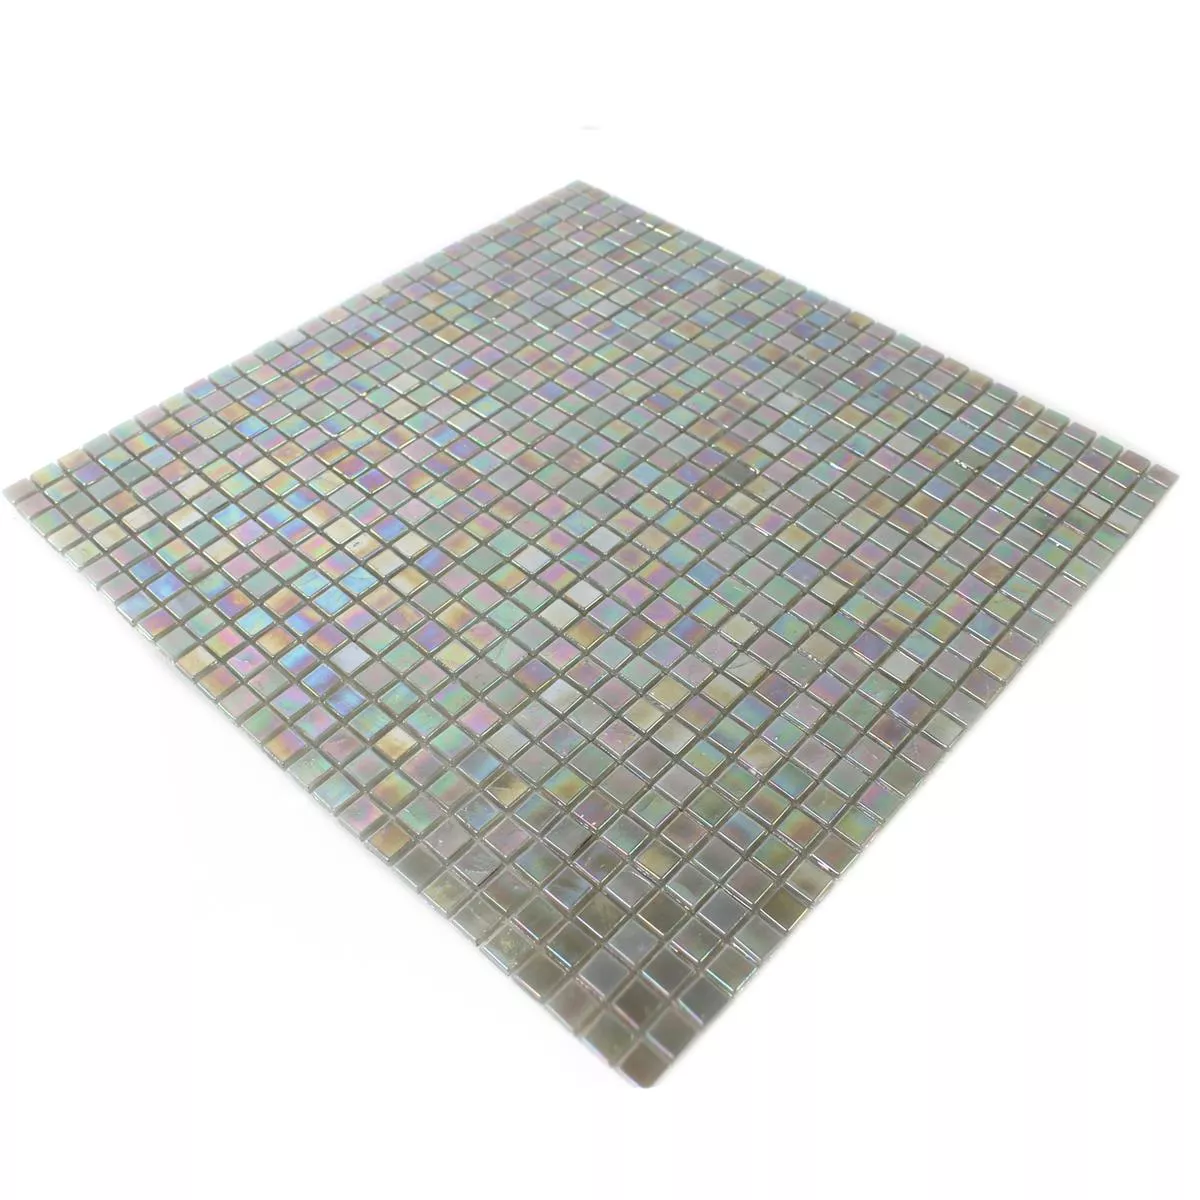 Mosaic Tiles Glass Nacre Effect amas